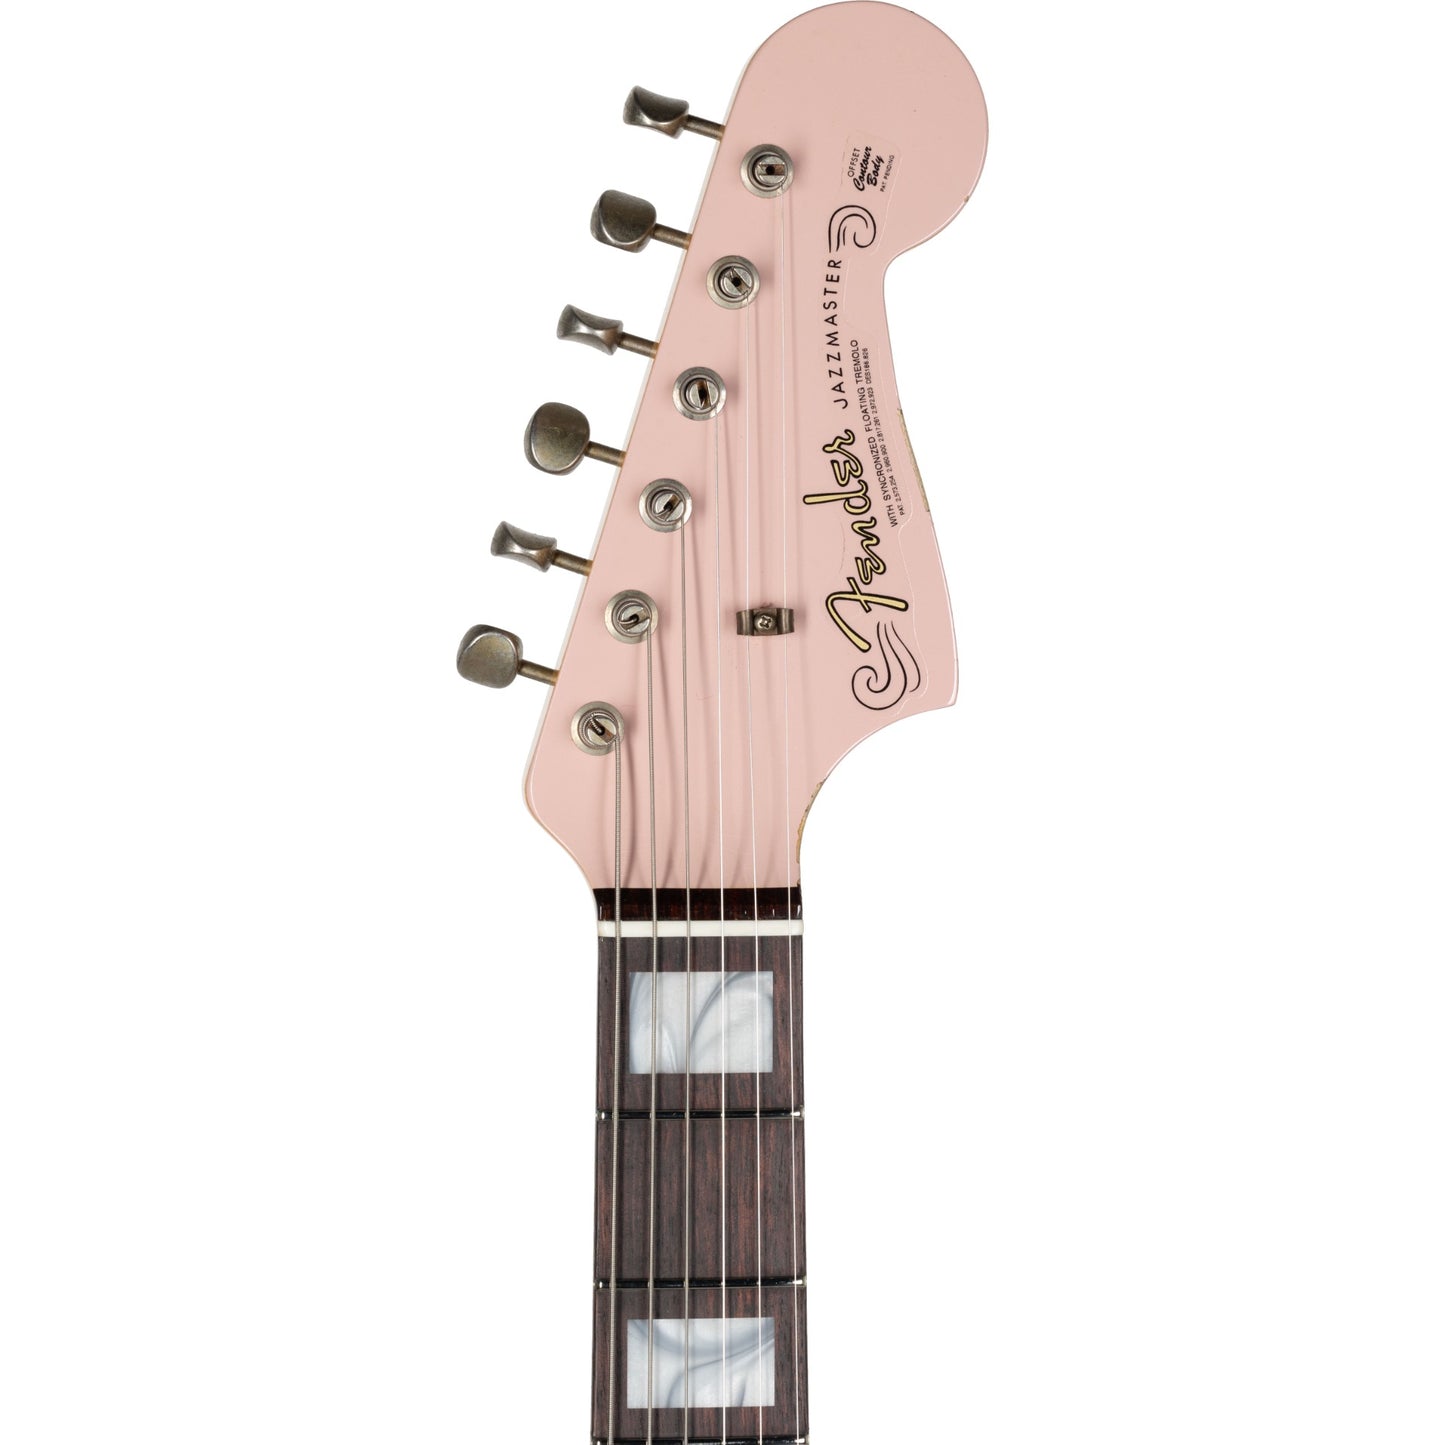 Fender Custom Shop 62 Jazzmaster Relic Electric Guitar - Shell Pink